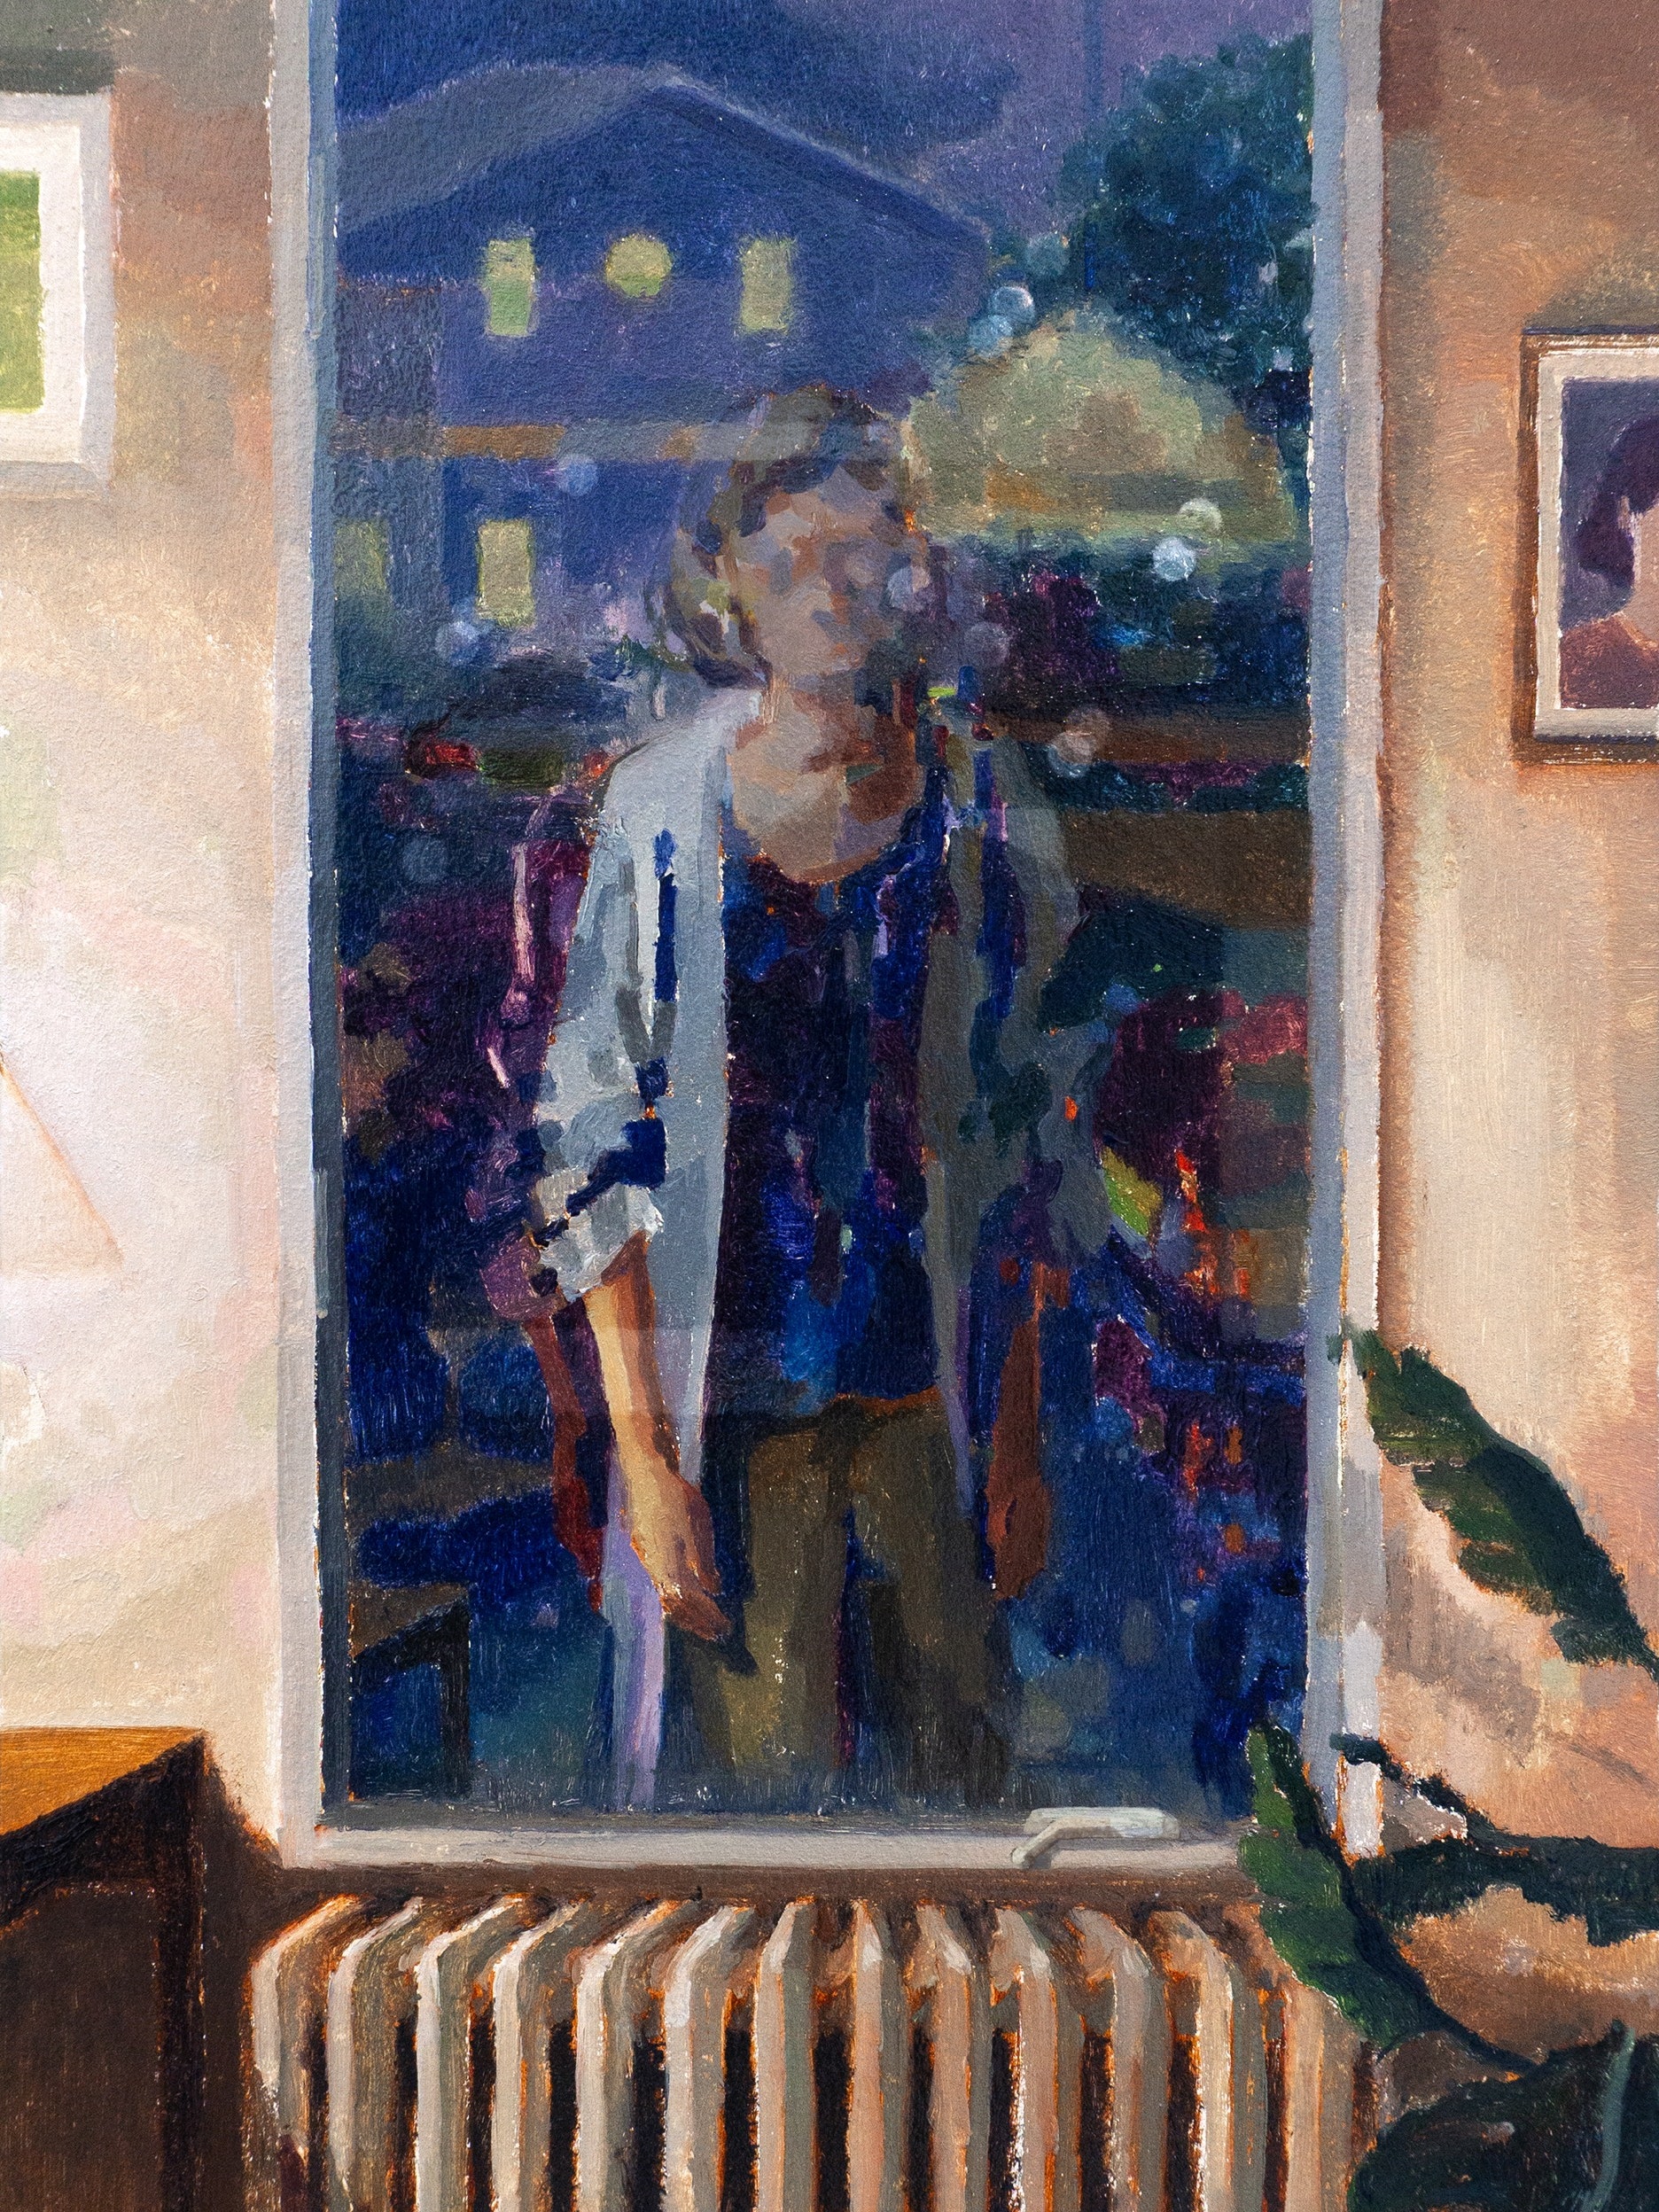 A woman wearing a light blue coat is reflected in a window